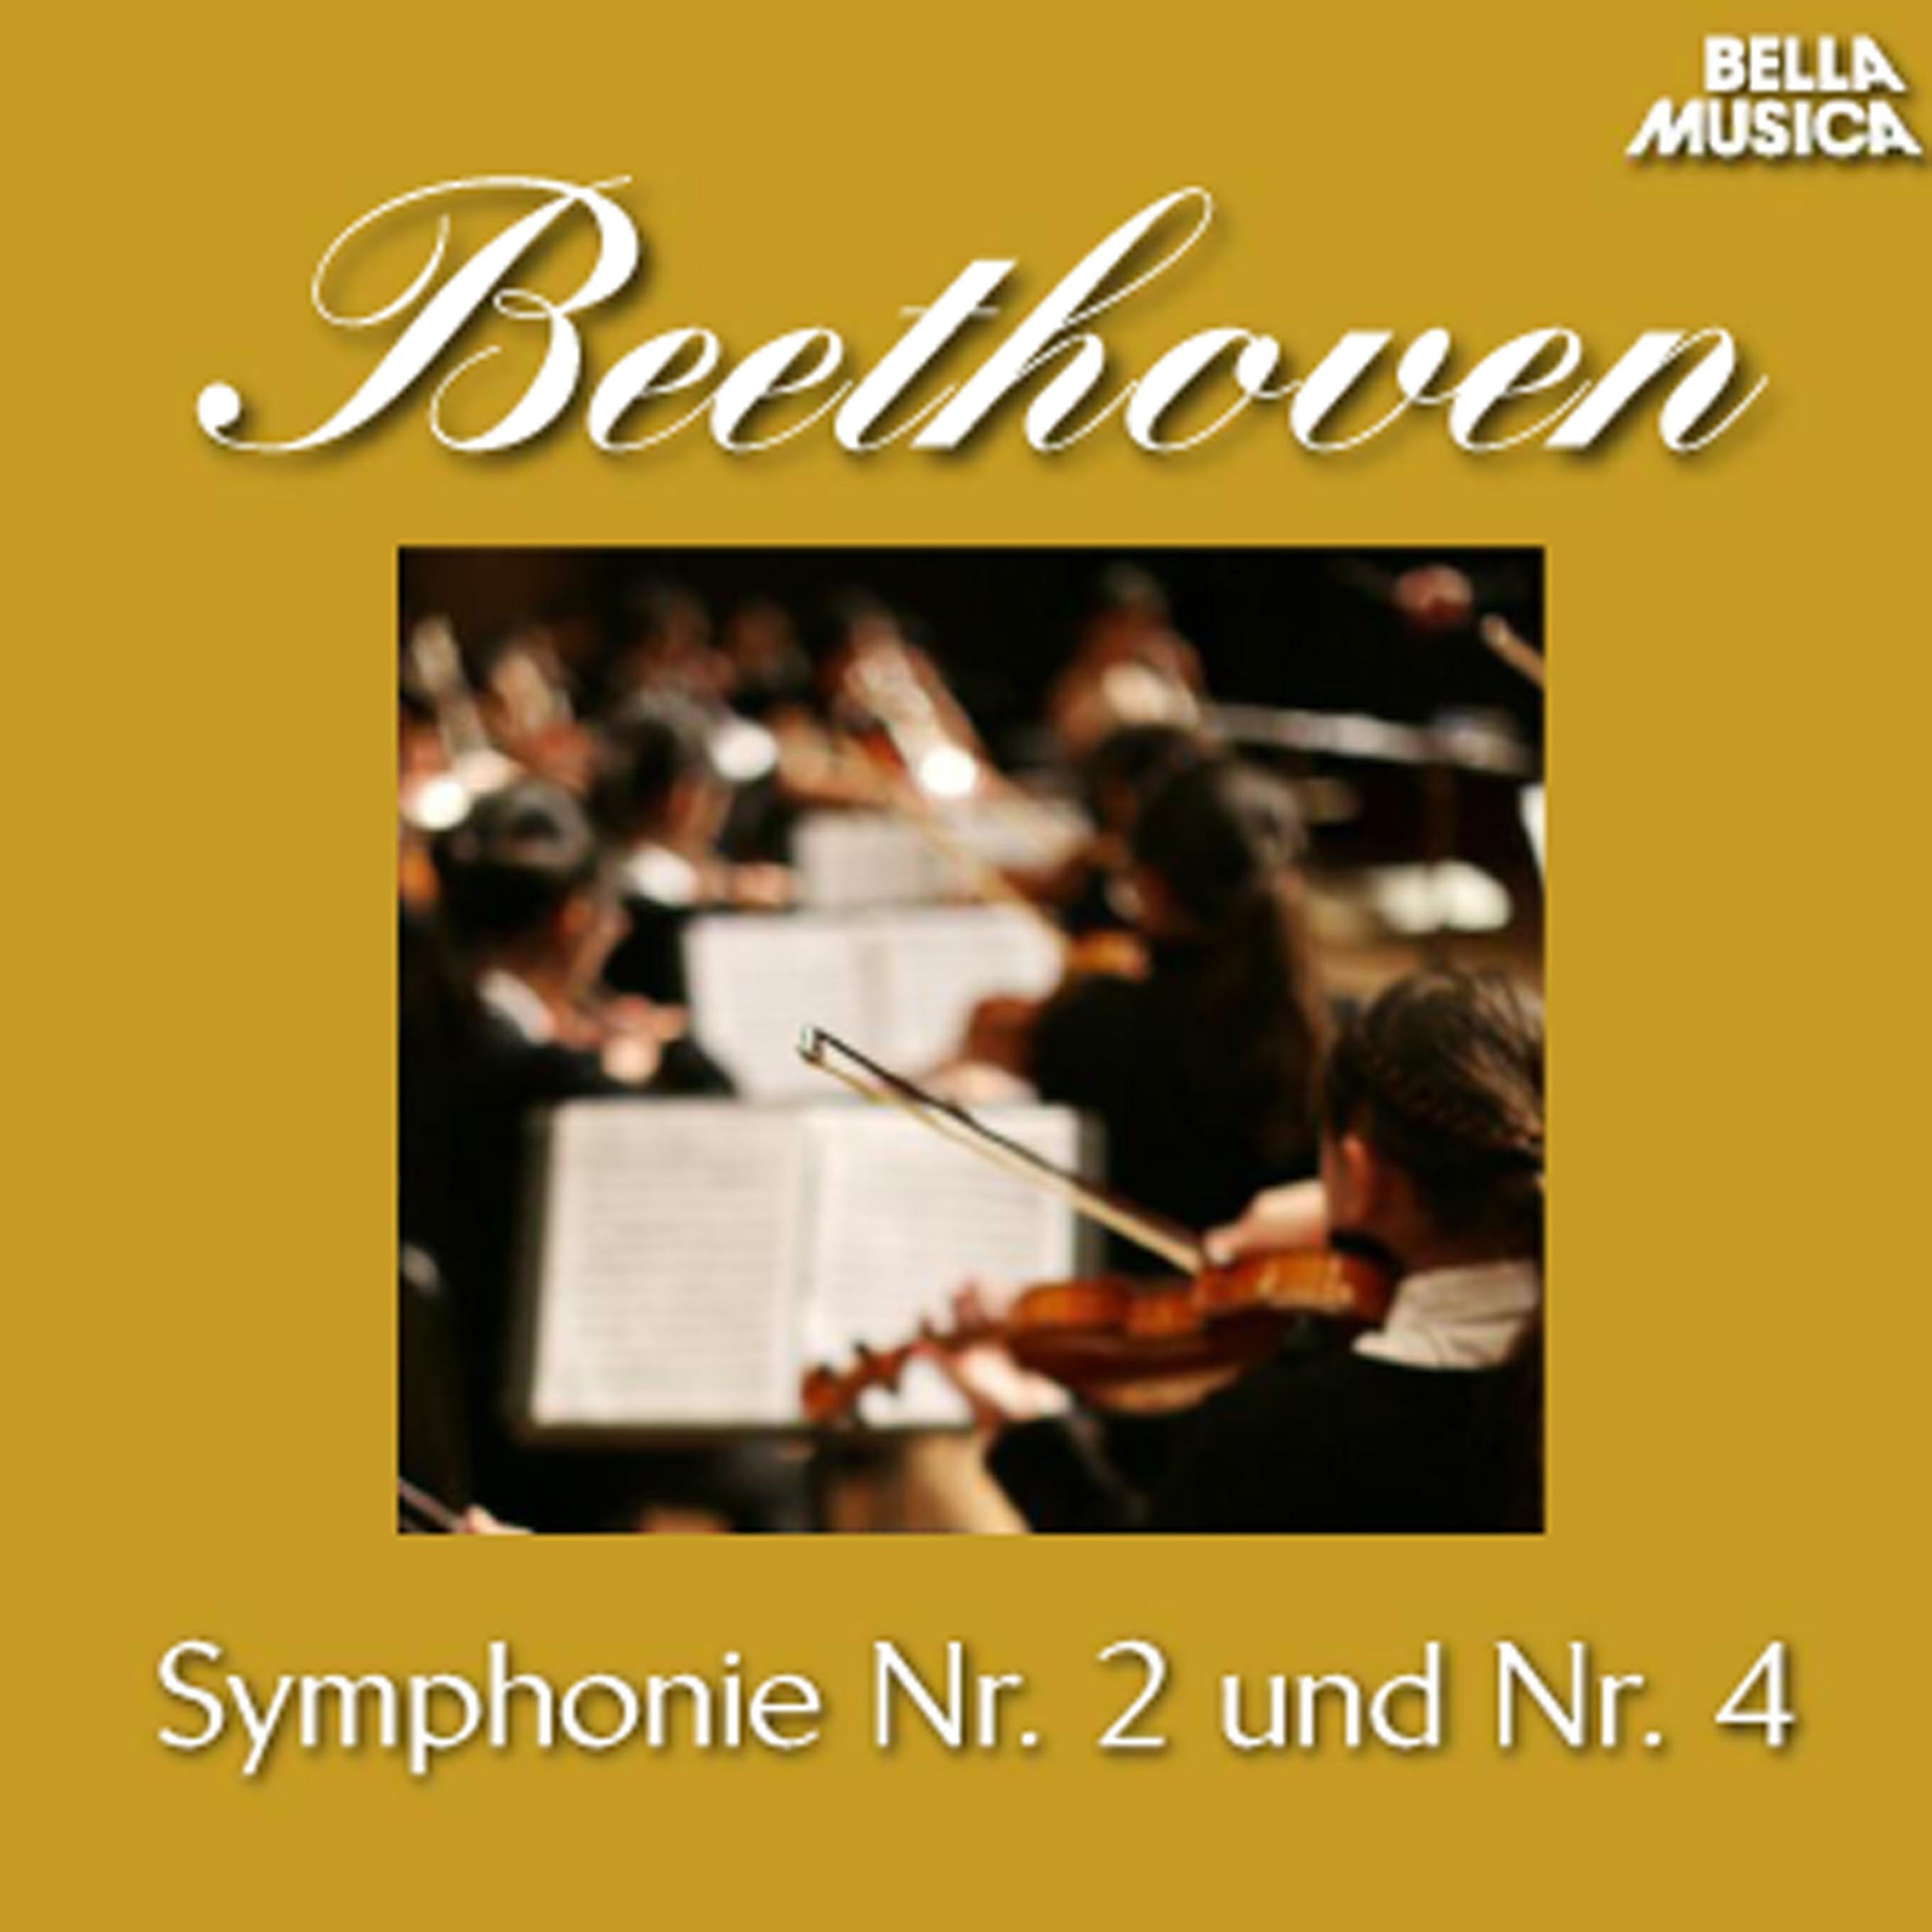 Sinfonie No. 4 fü r Orchester in BFlat Major, Op. 60: I. Adagio  Allegro vivace